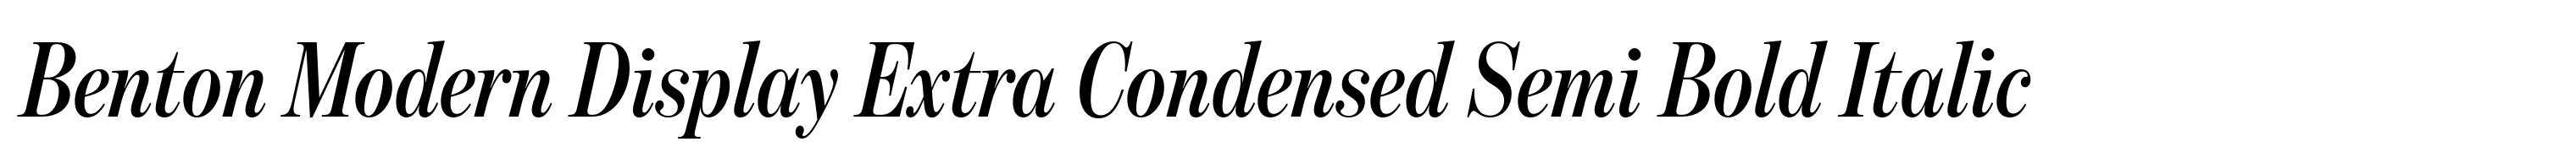 Benton Modern Display Extra Condensed Semi Bold Italic